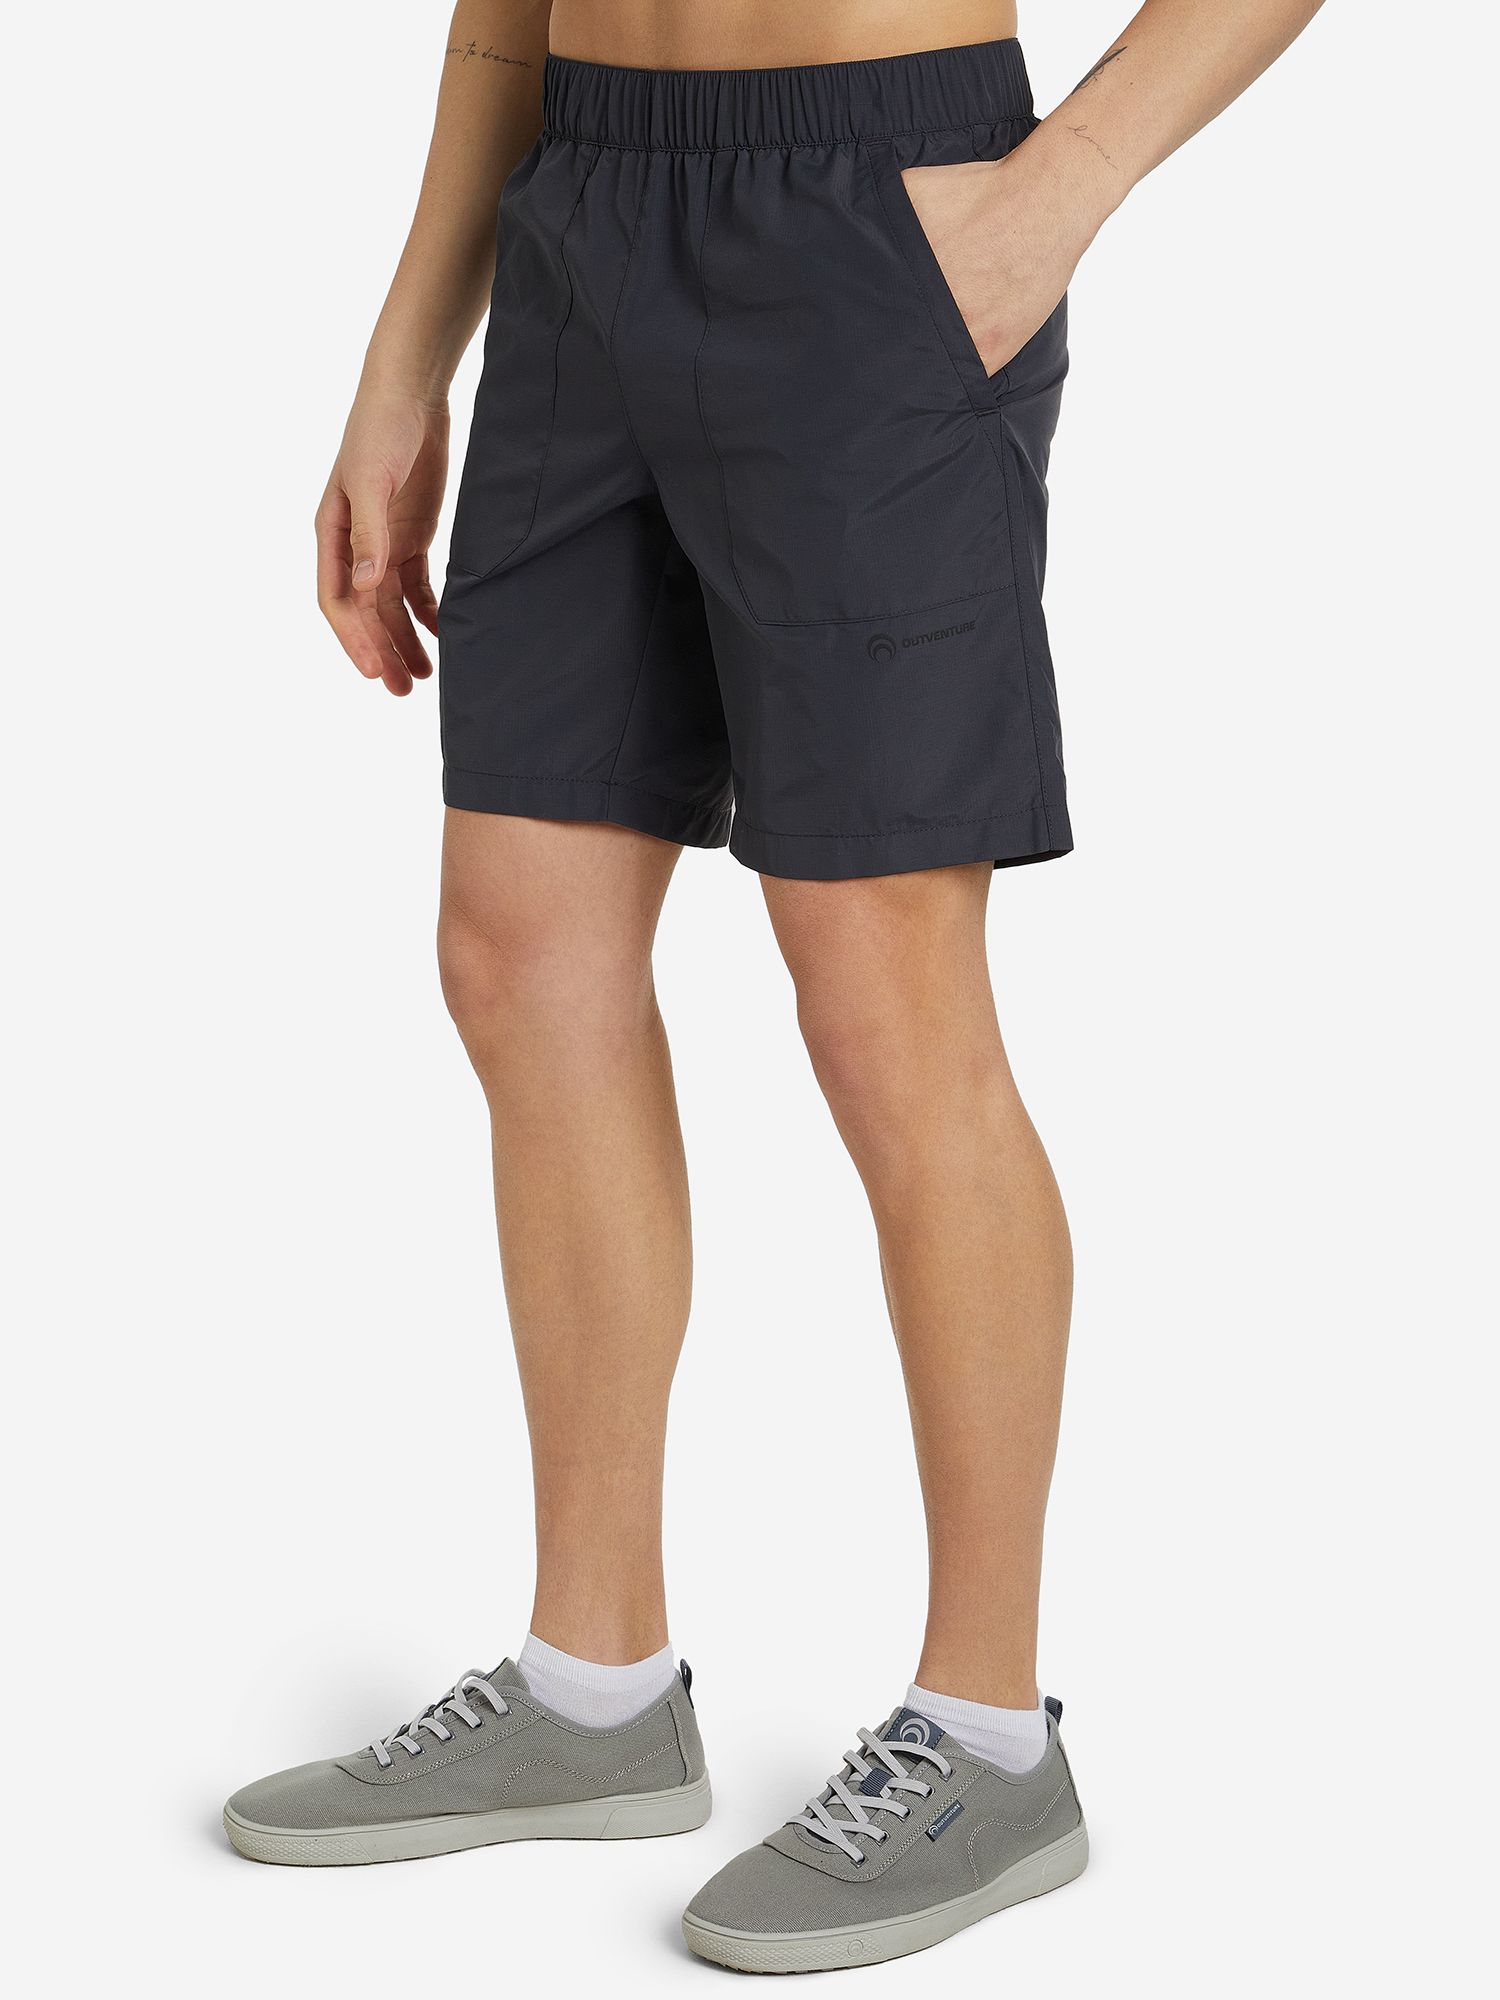 Шорты екатеринбург. Шорты Джома синие. Шорты 4f men's functional shorts h4z21-skmf015-20s. Joma шорты синие. Шорты XXL.